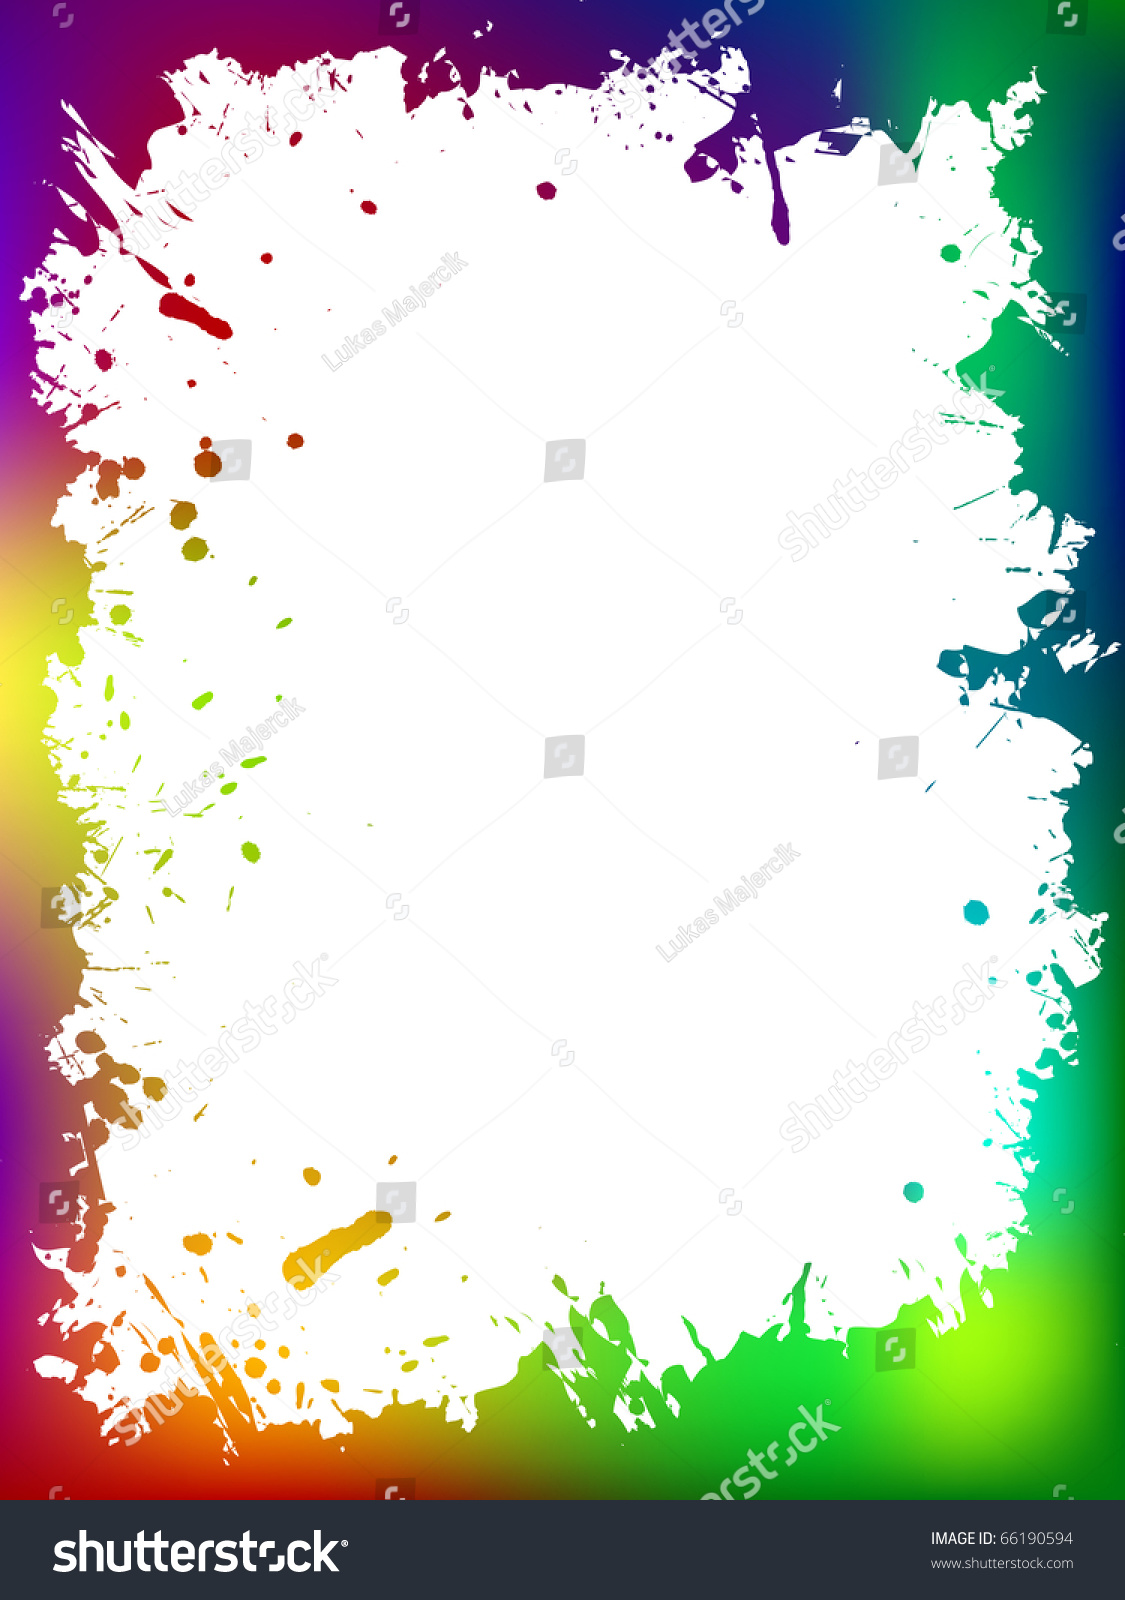 Colorful Grunge Border Stock Vector Illustration 66190594 : Shutterstock